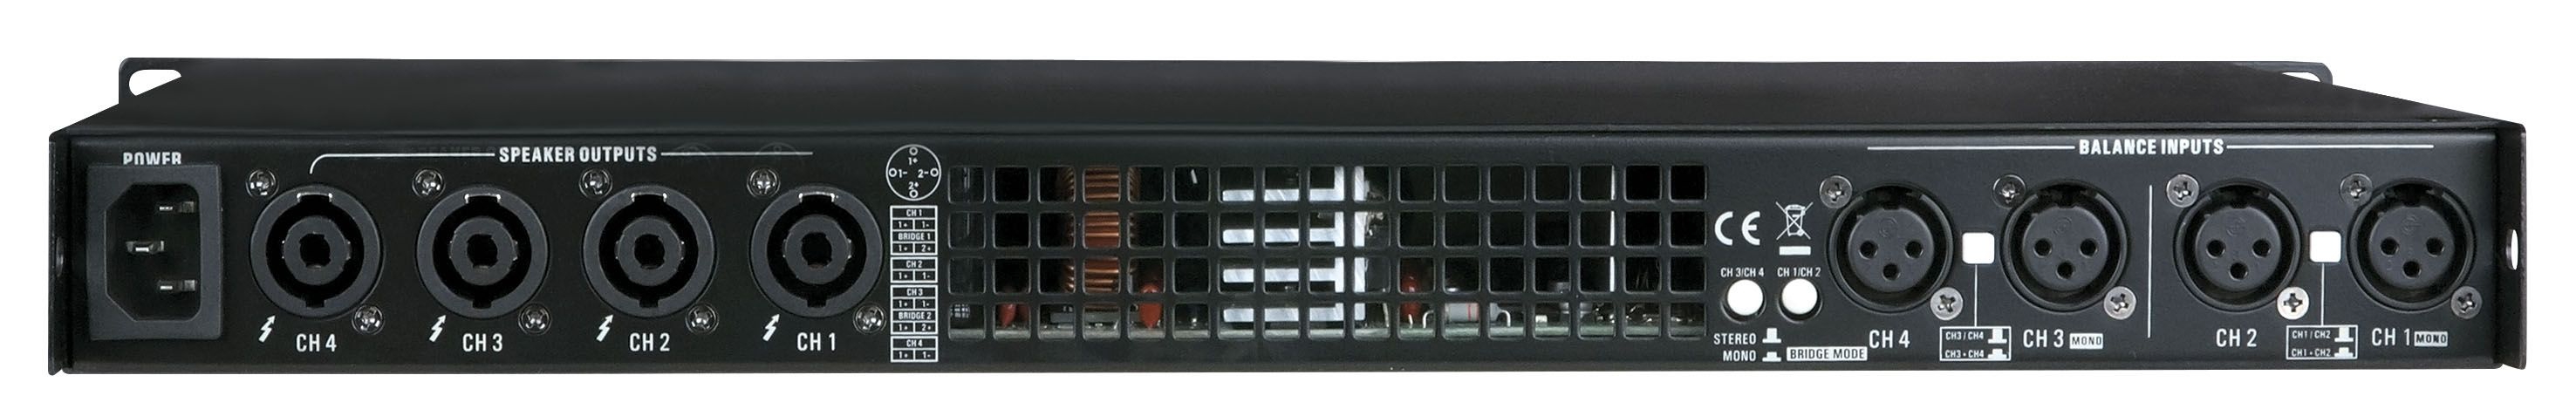 DAP-Audio Qi-4200 4 Channel installation amp 4x200